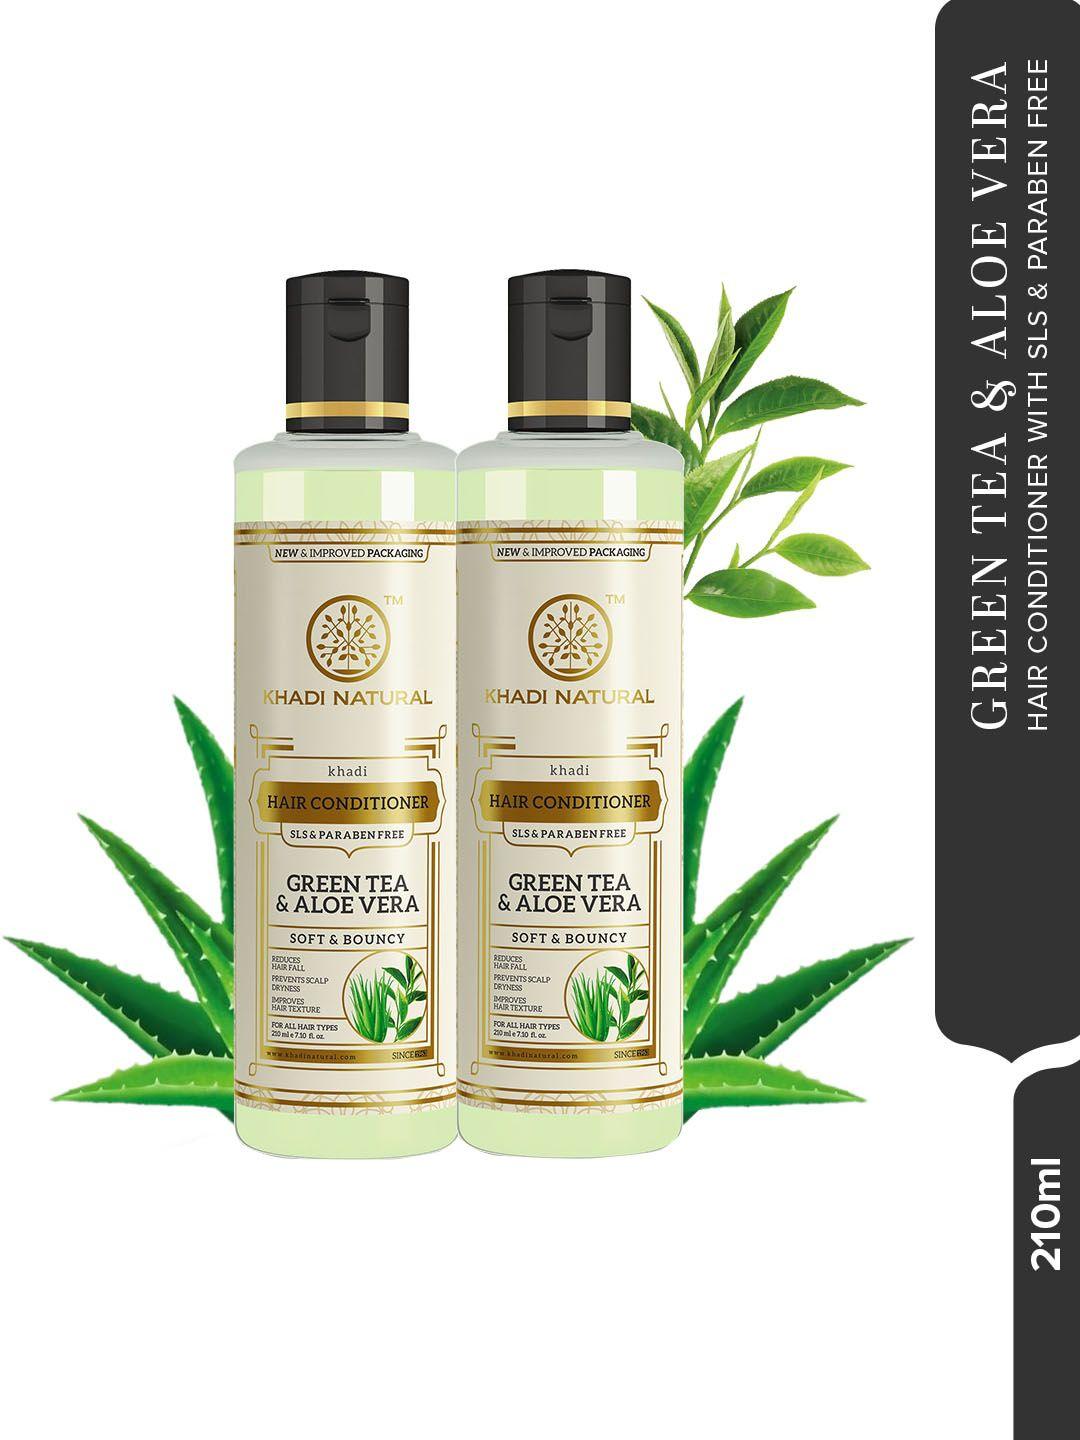 khadi natural set of 2 green tea & aloe vera hair conditioner - 210 ml each